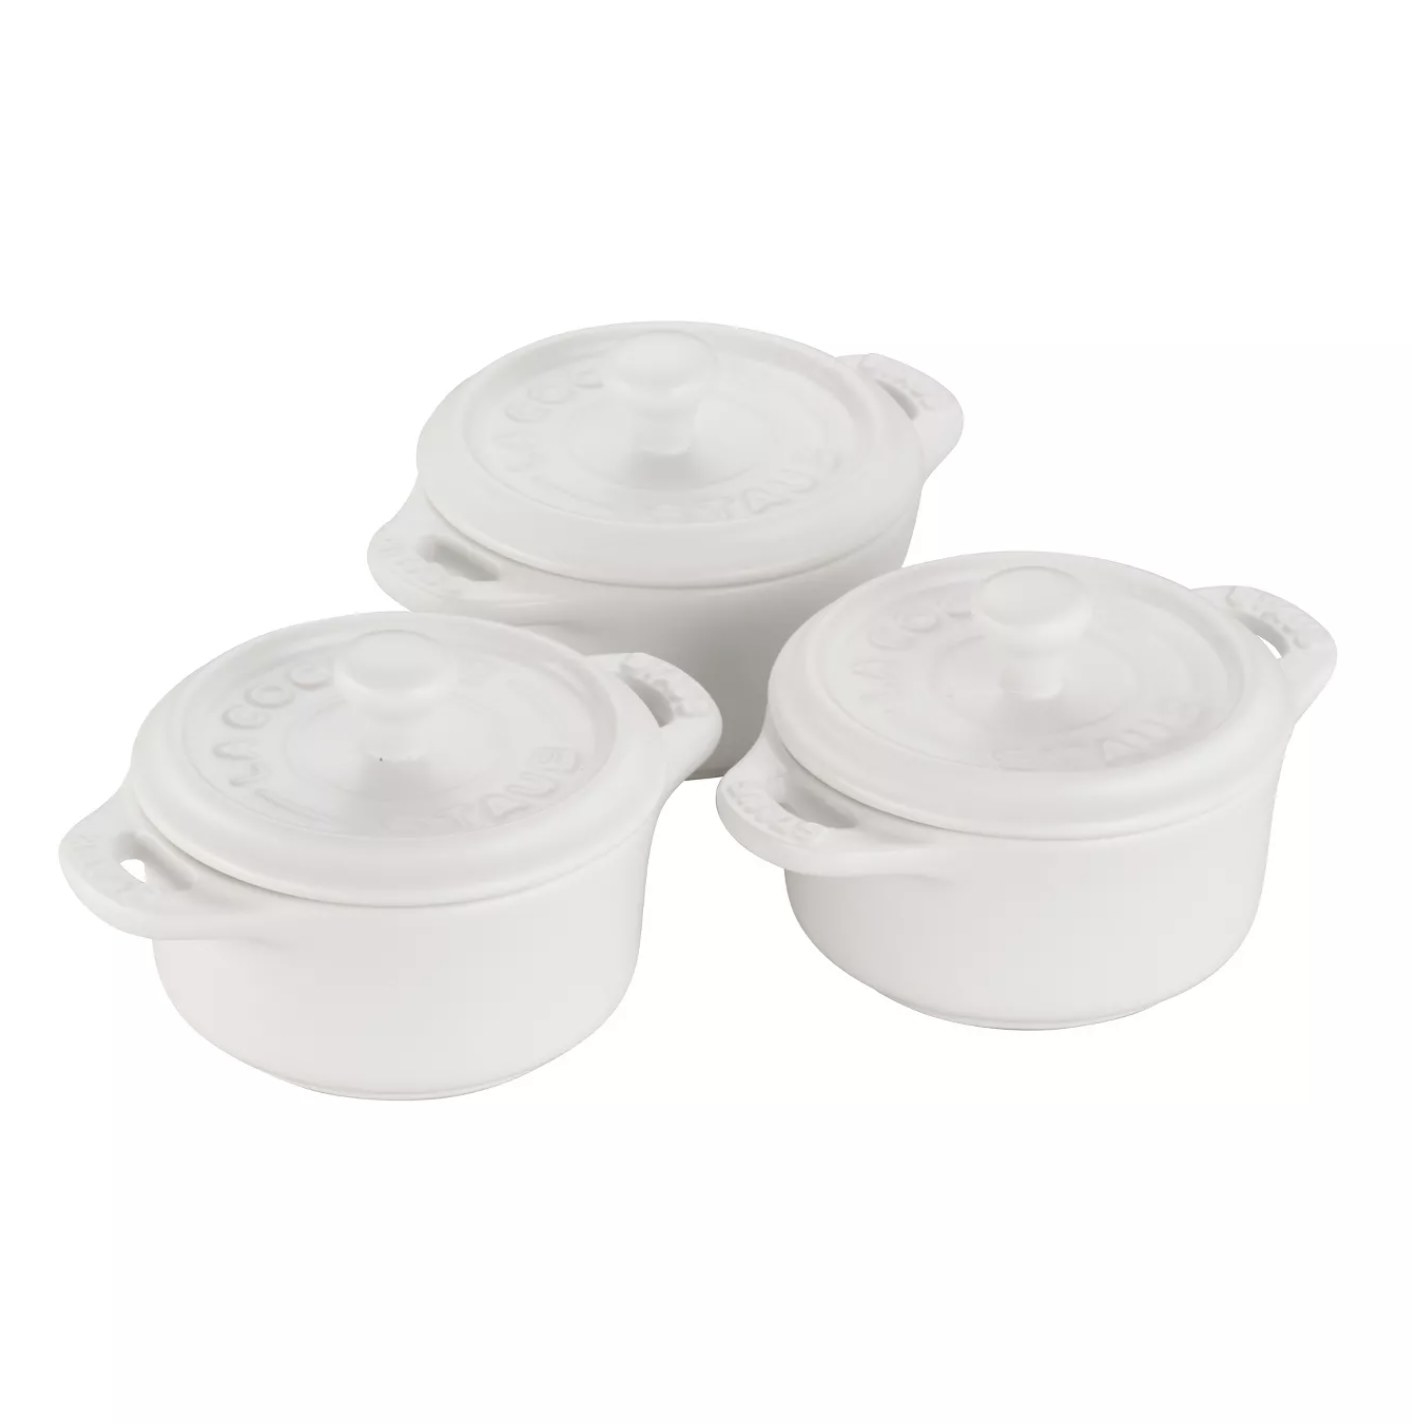 Three white mini round cocotte set